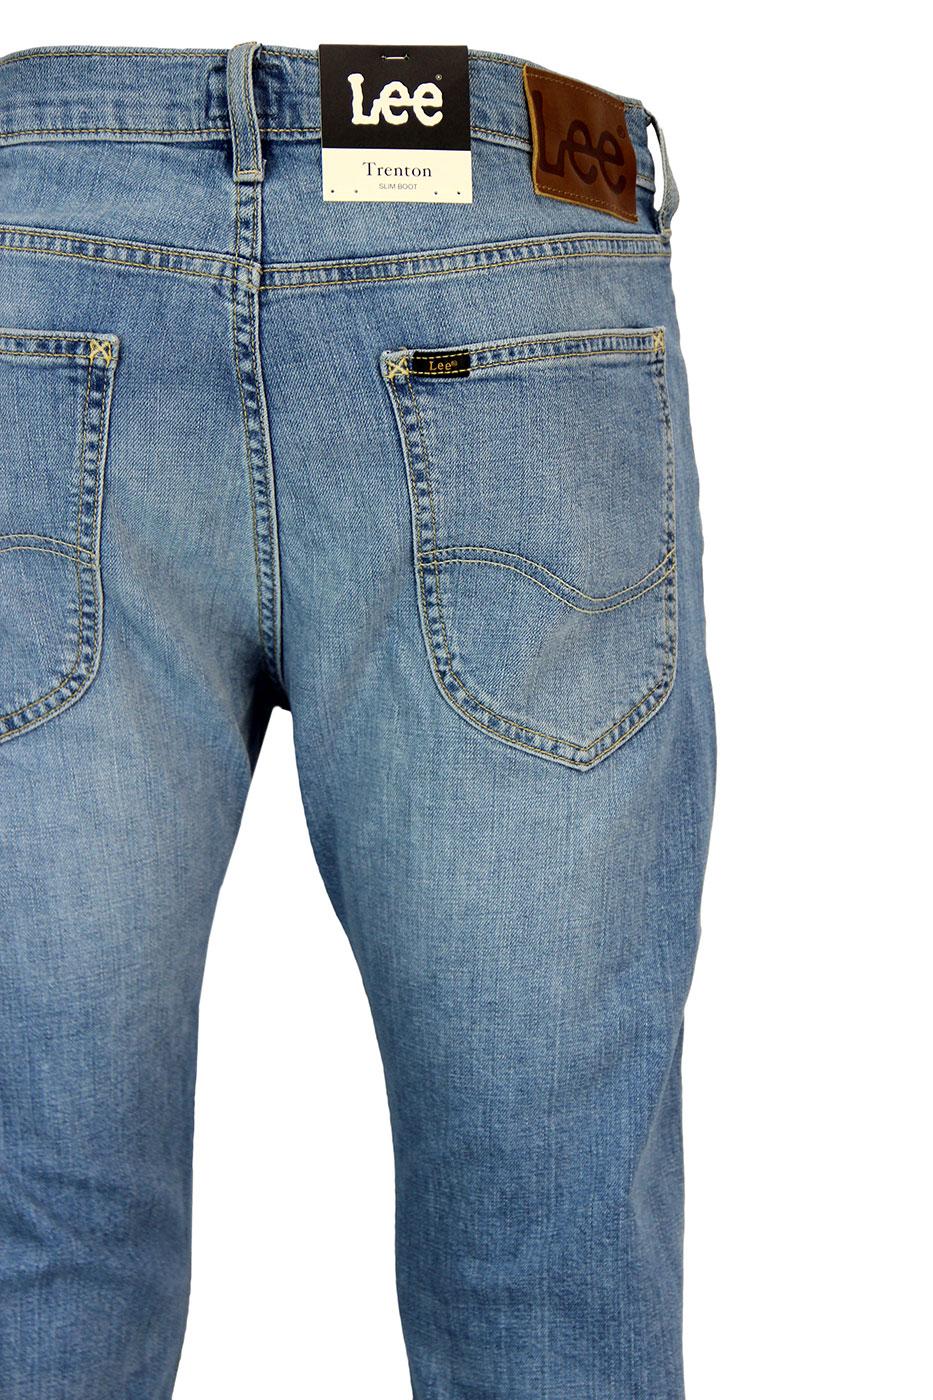 lee trenton bootcut jeans